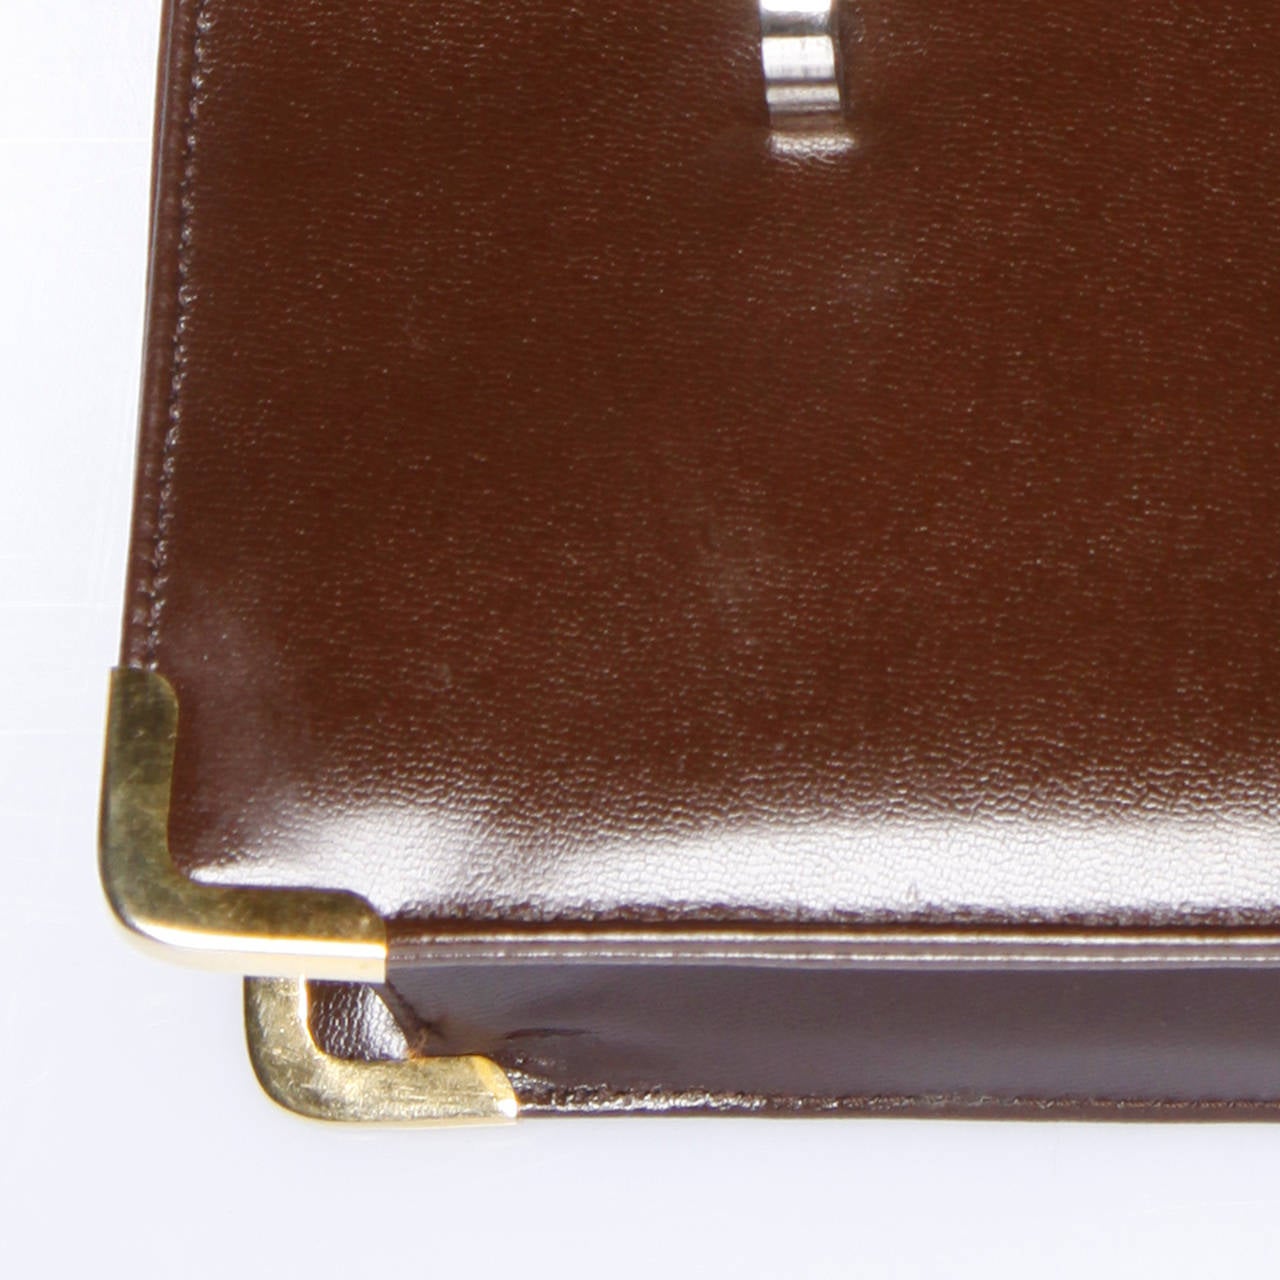 Black Koret Vintage Brown Leather Bag with Coin Purse